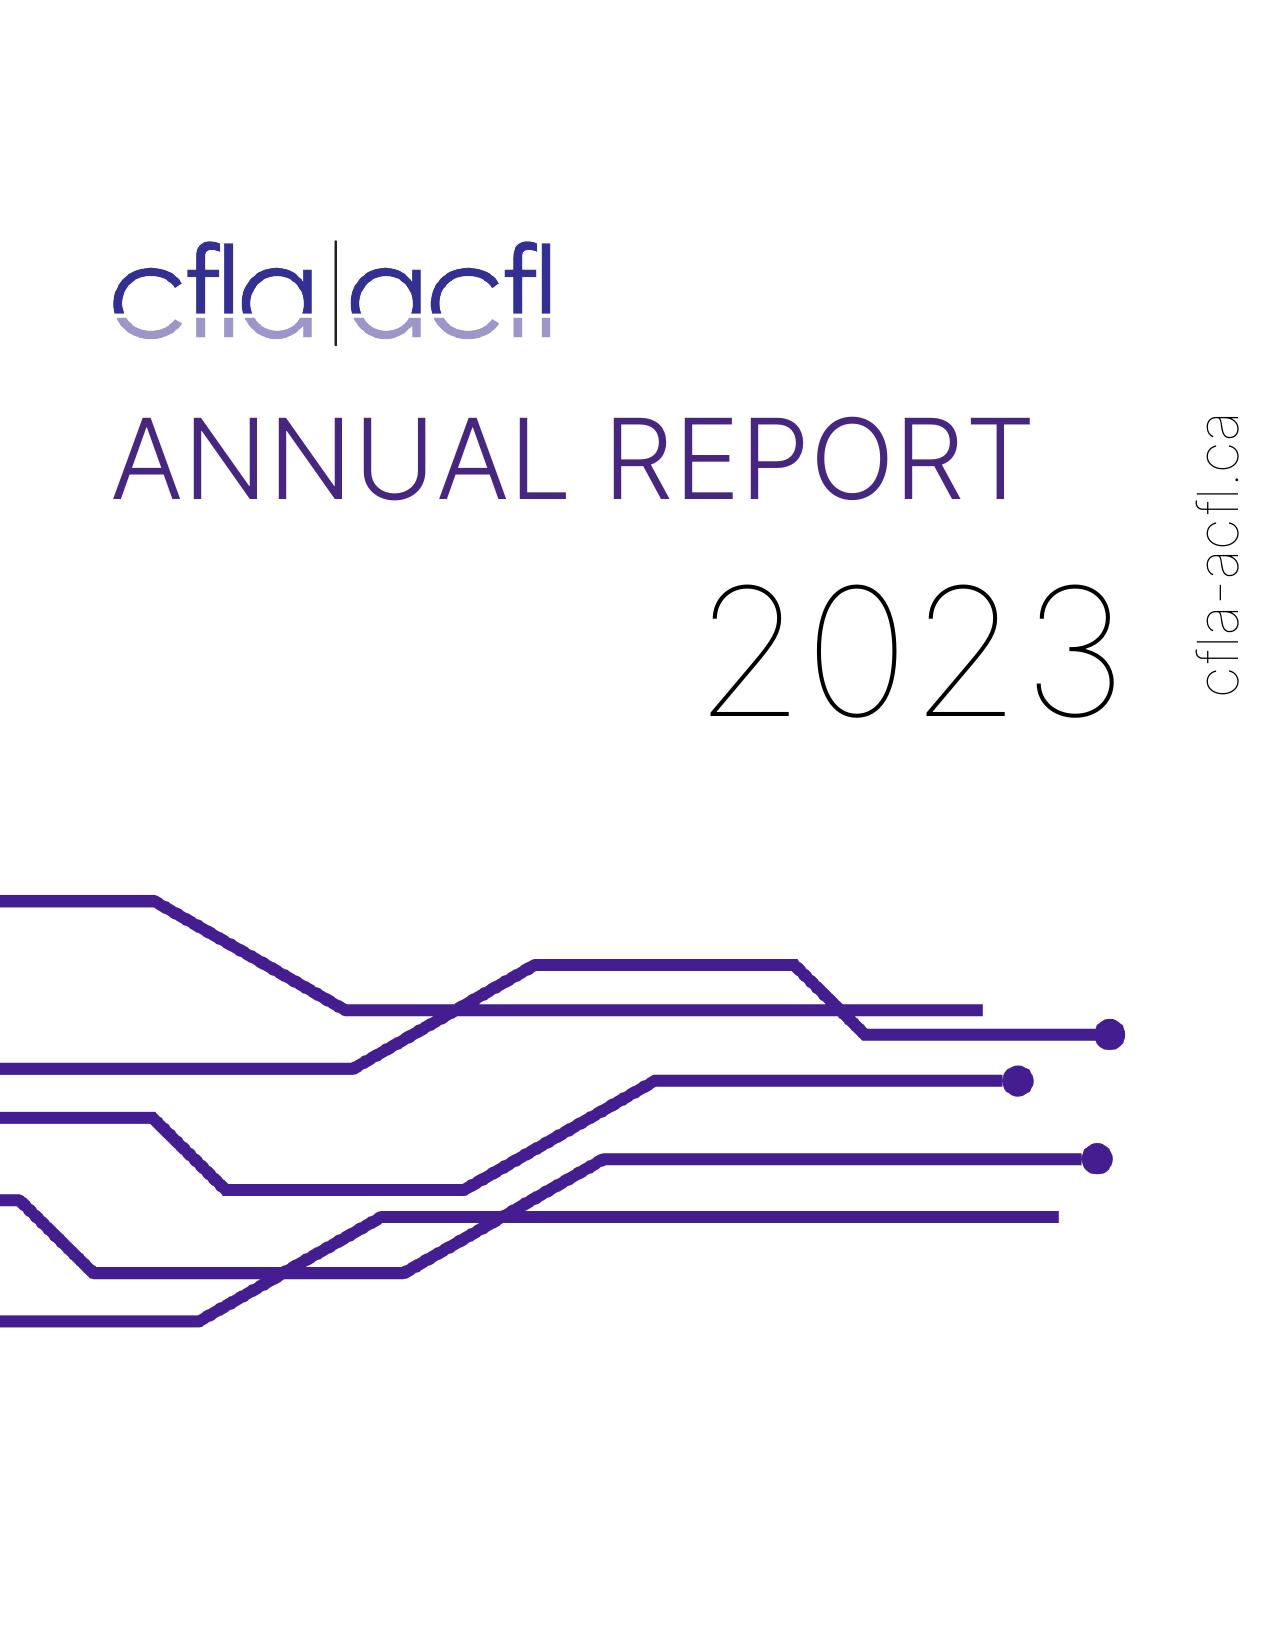 CFLA-ACFL 2022 Annual Report